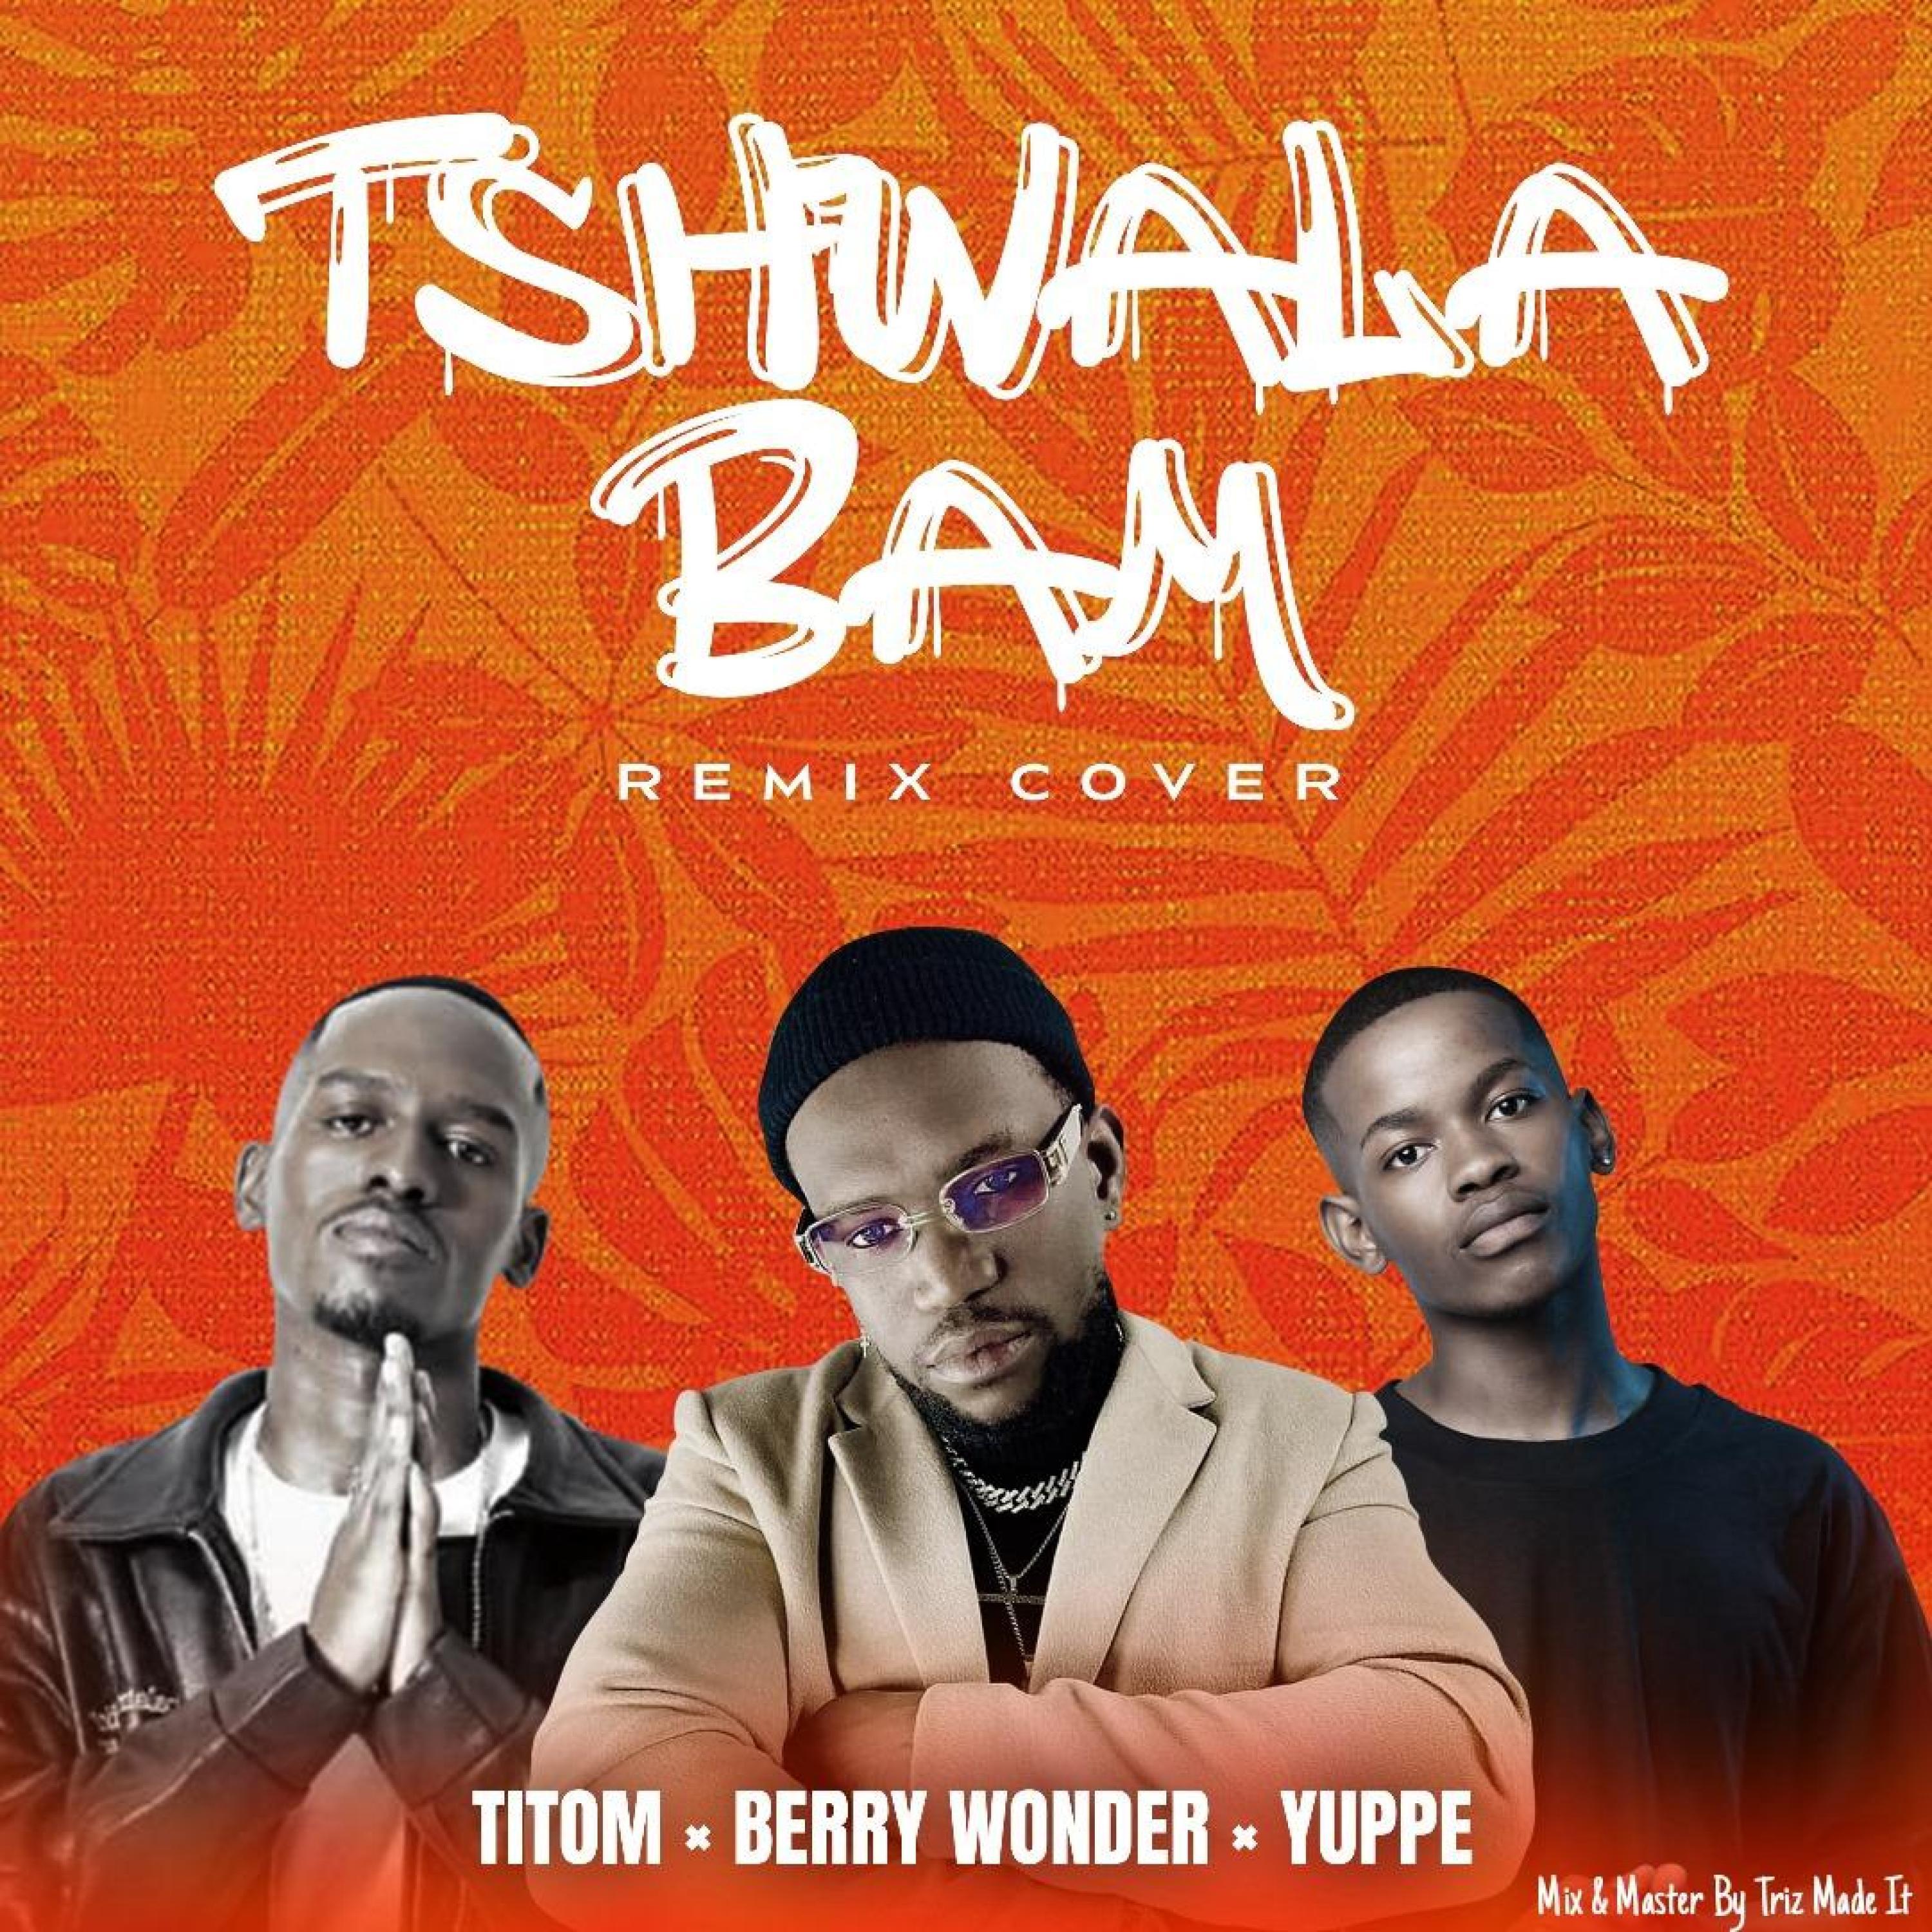 Berry Wonder - Tshwala Bam (feat. Titom & Yuppe) (Remix)